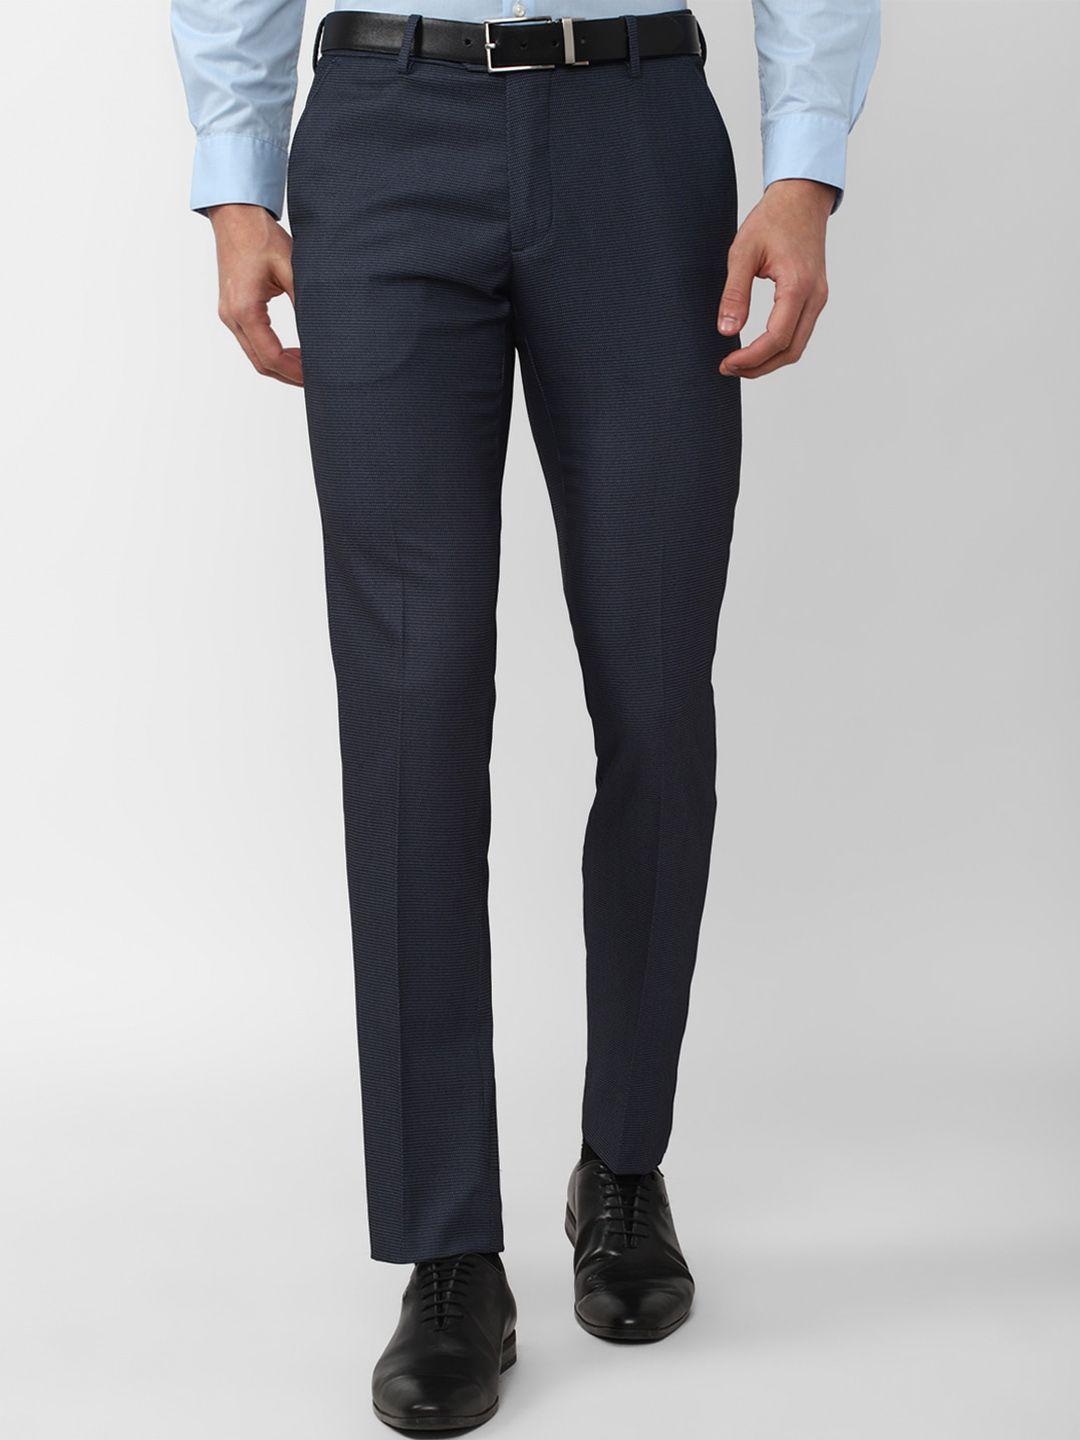 peter-england-men-slim-fit-formal-trouser